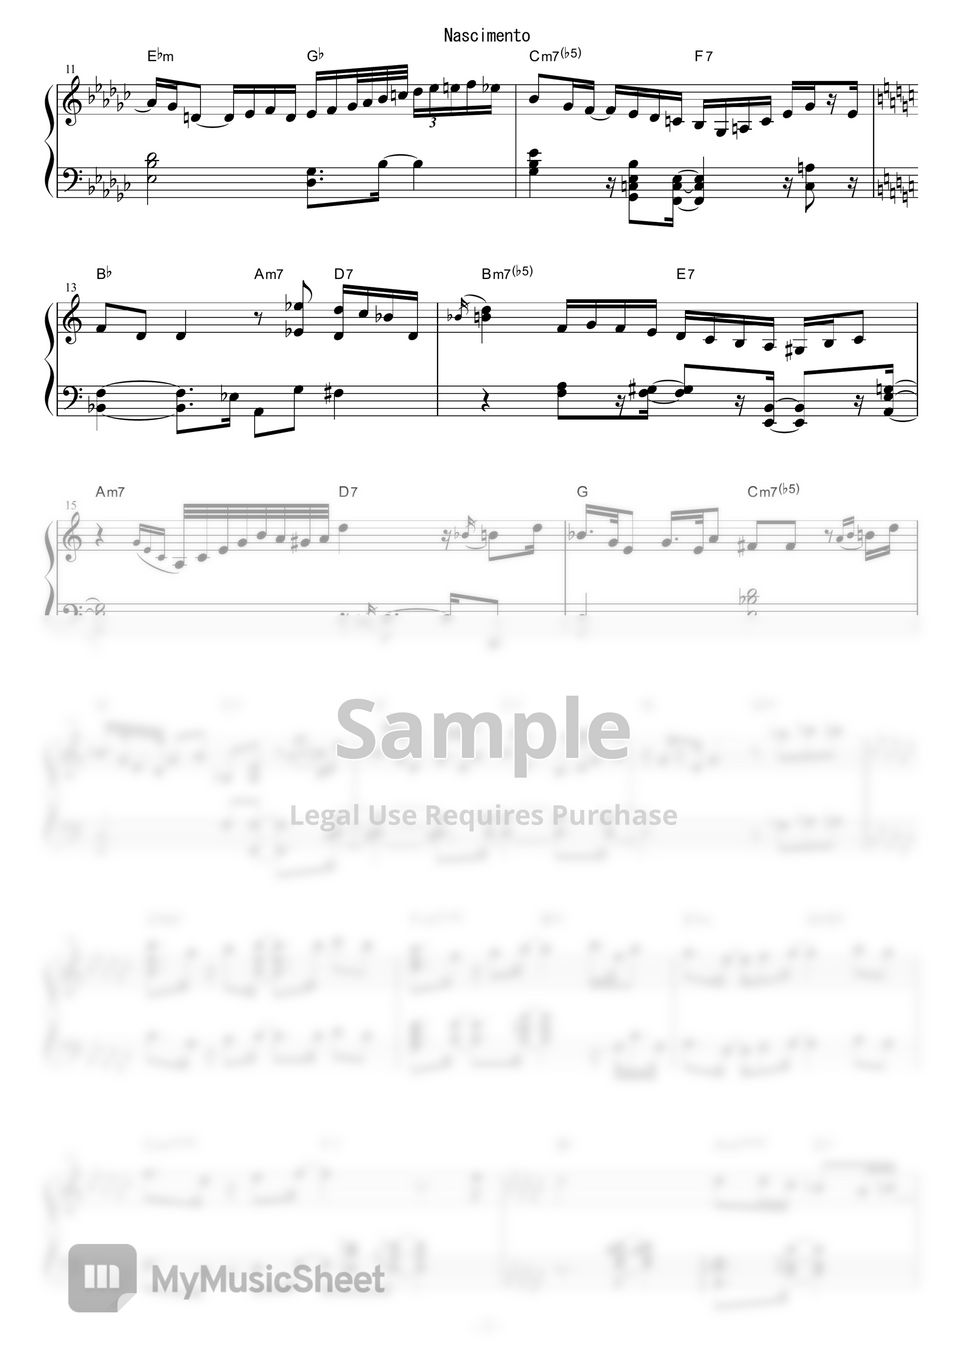 Tommy Flanagan - Nascimento by piano*score